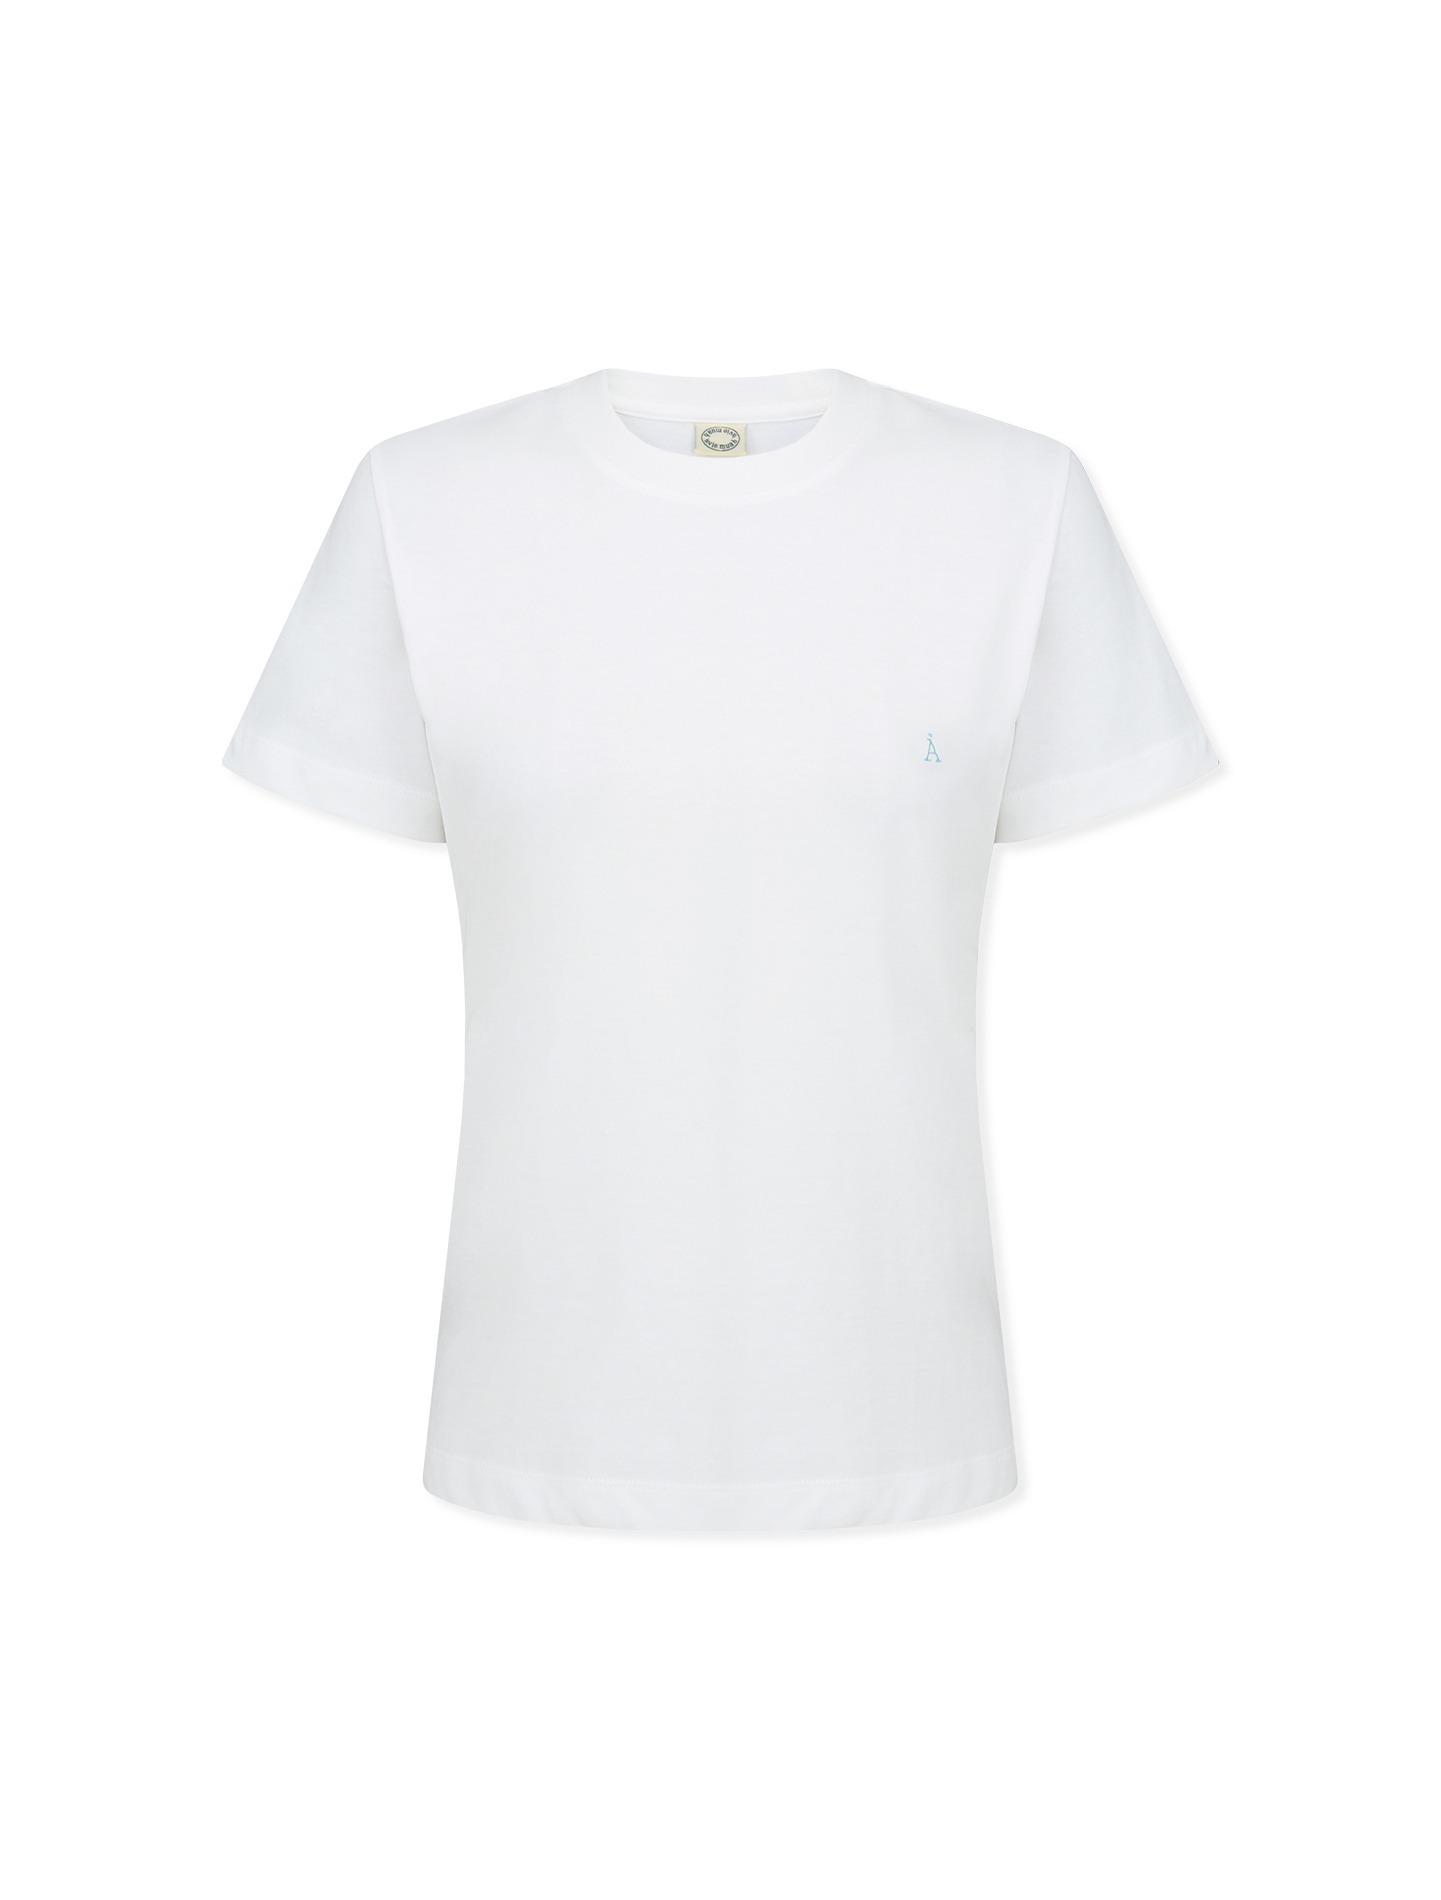 Signature Logo T-Shirt (White)